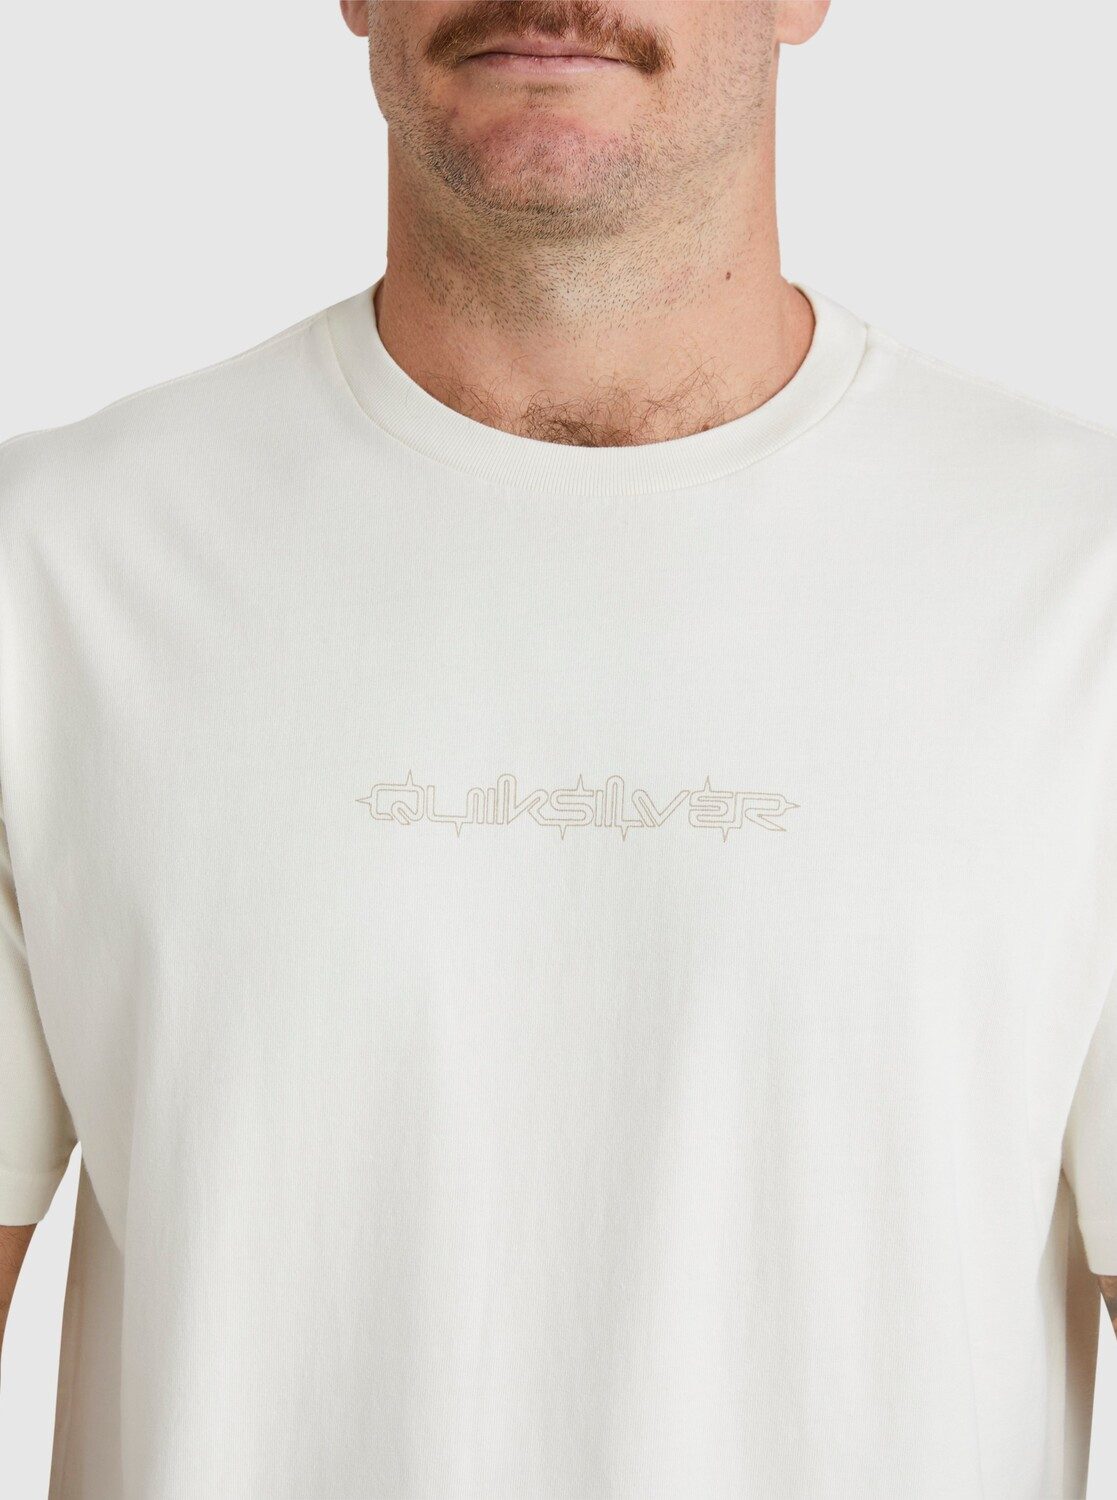 Quiksilver T-shirt Mikey